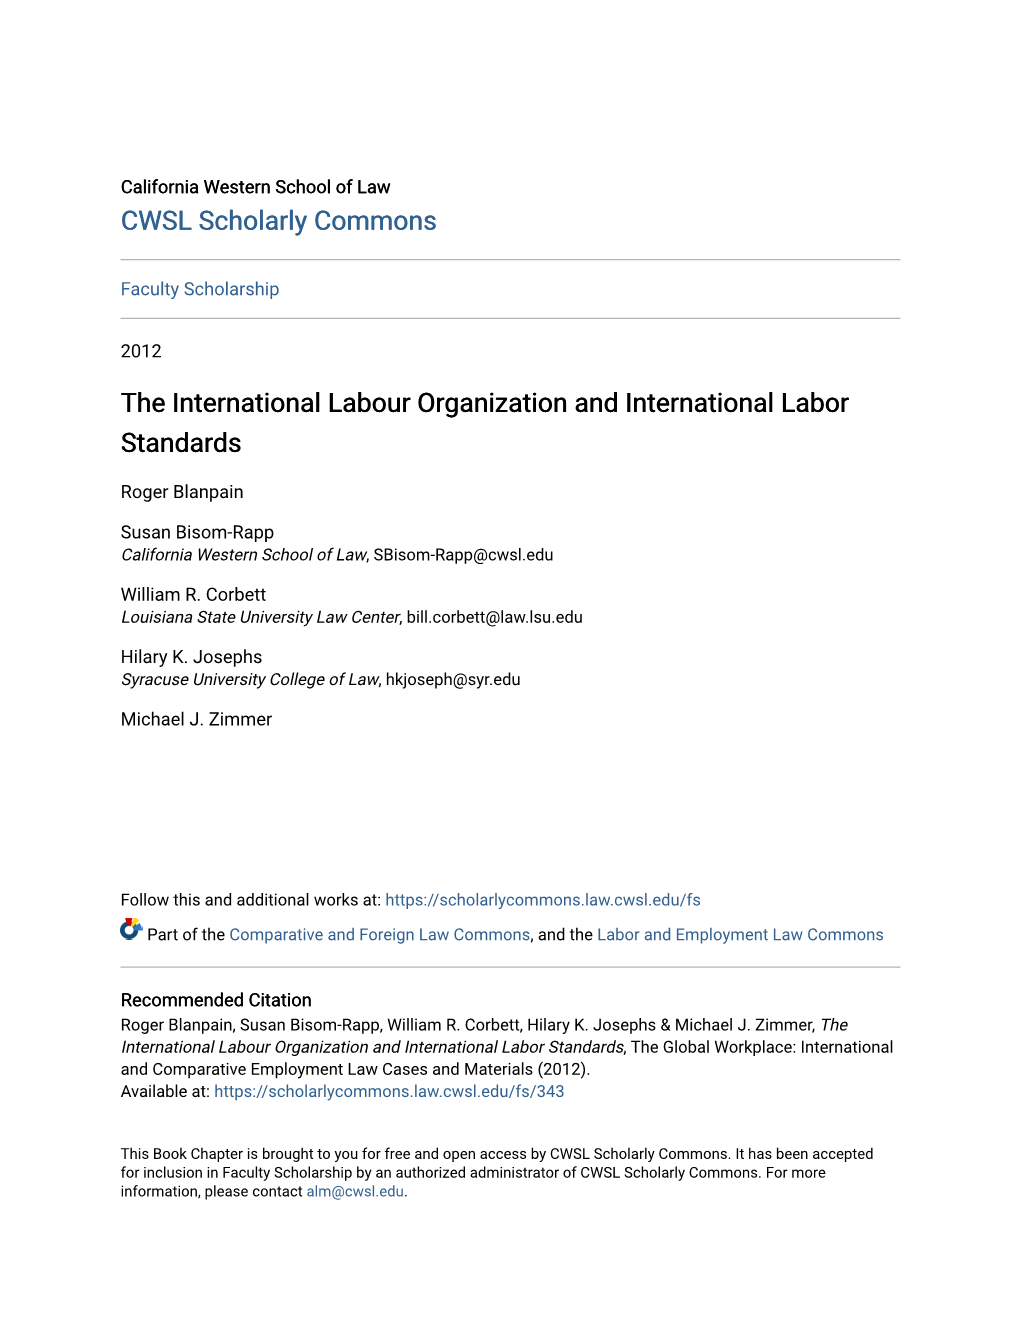 The International Labour Organization and International Labor Standards